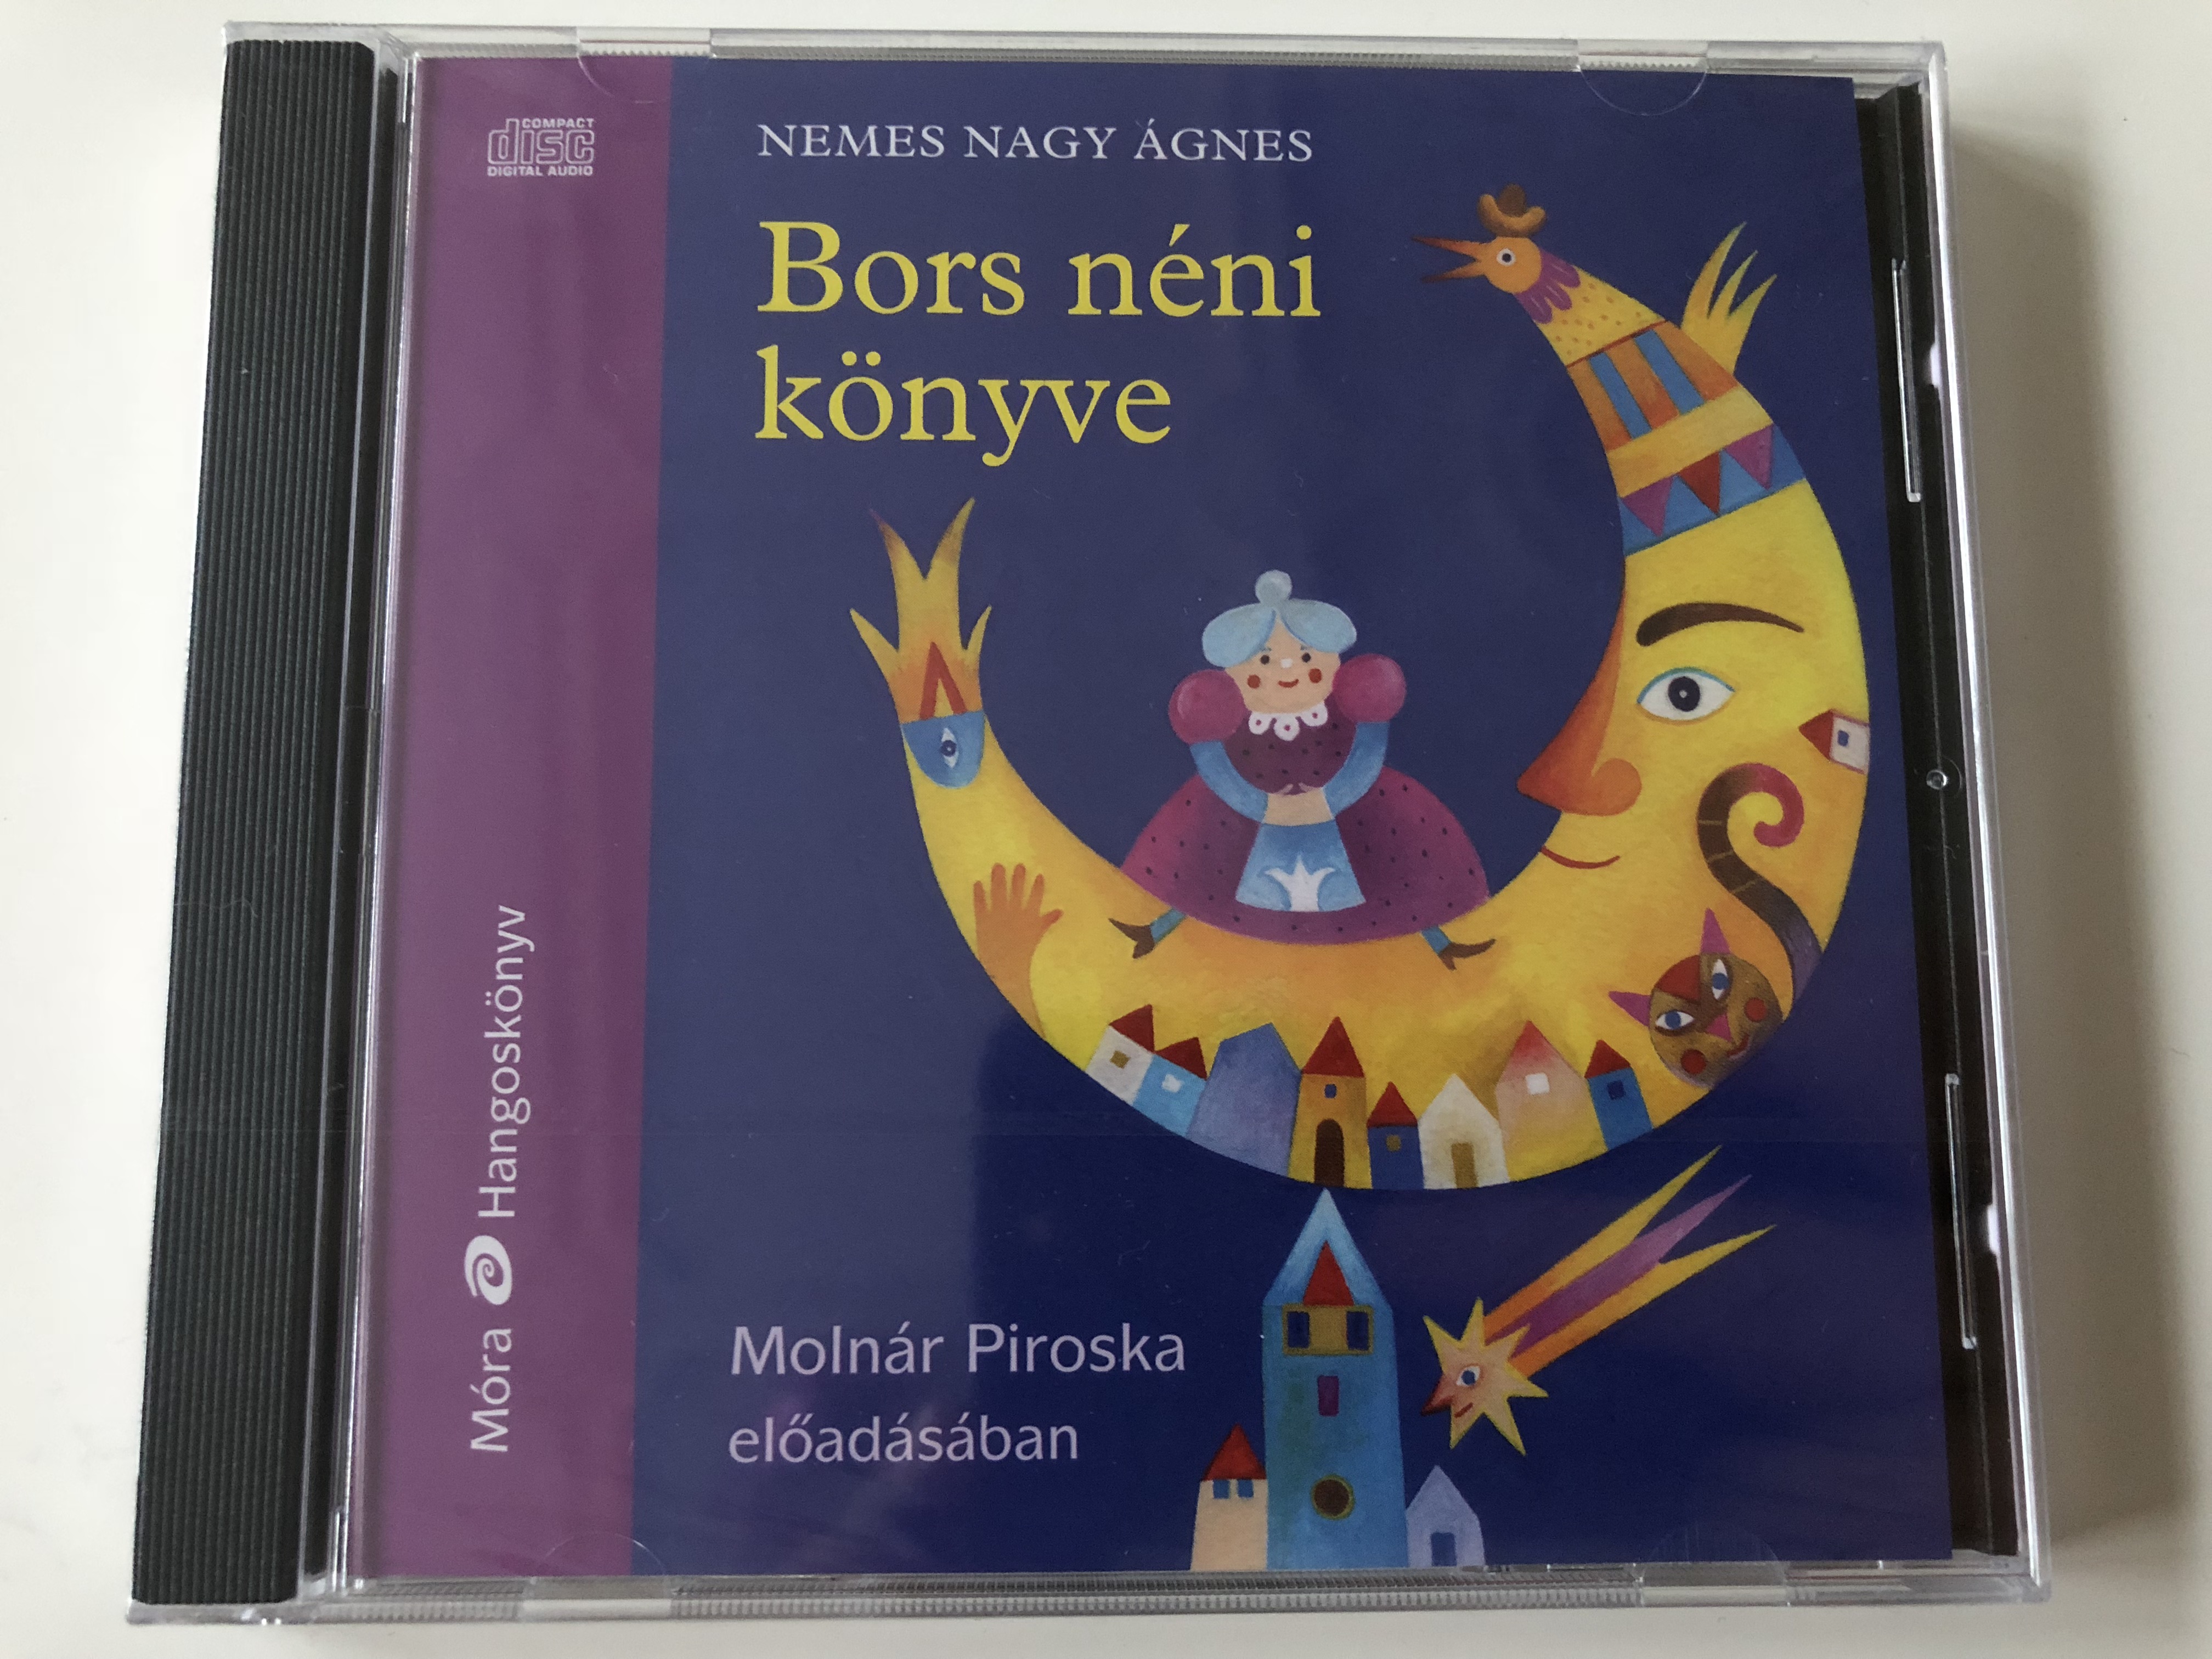 bors-n-ni-k-nyve-by-nemes-nagy-gnes-hungarian-language-audio-book-read-by-moln-r-piroska-m-ra-k-nyvkiad-2016-1-.jpg